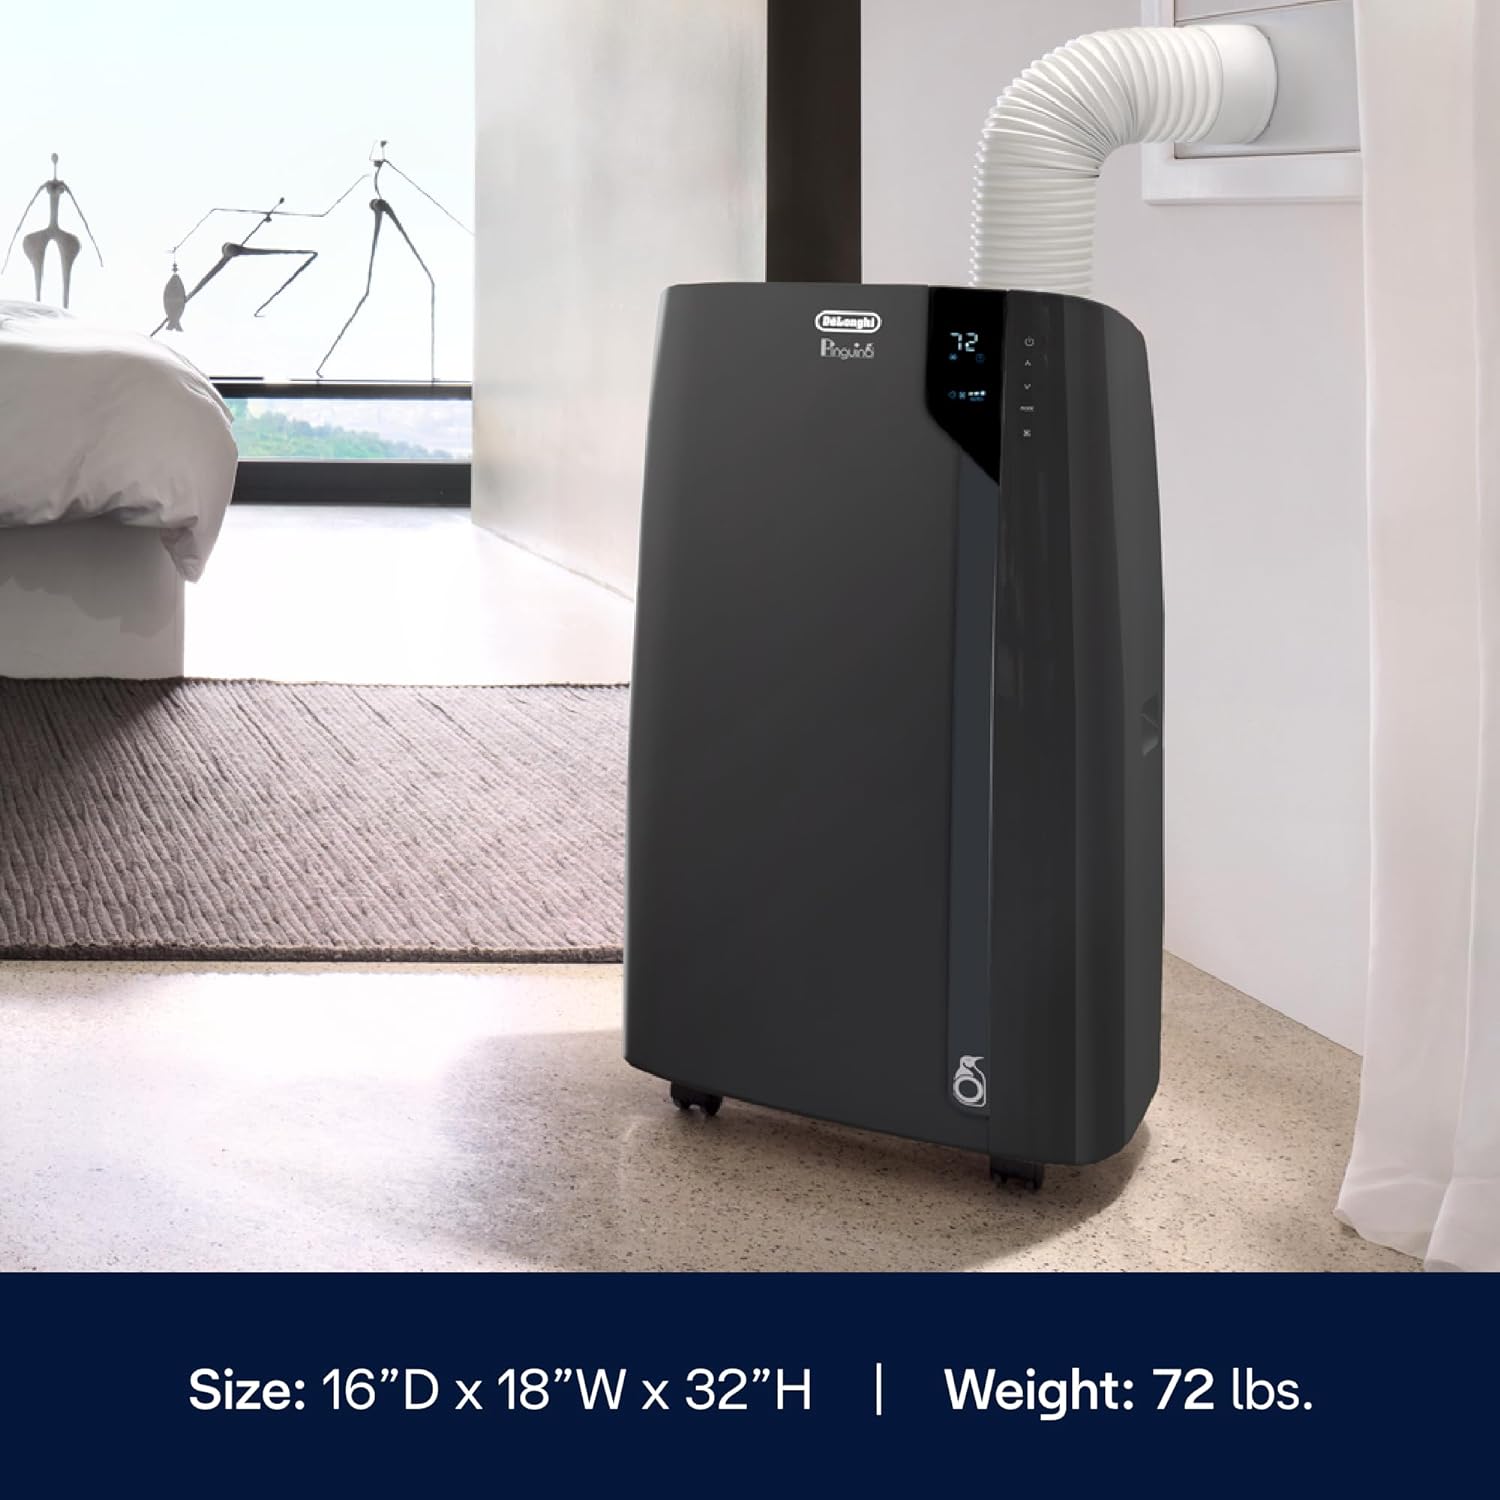 De'Longhi Pinguino PAC EX370LN 3-in-1 Portable Air Conditioner, 500 sq. ft. Dark Gray